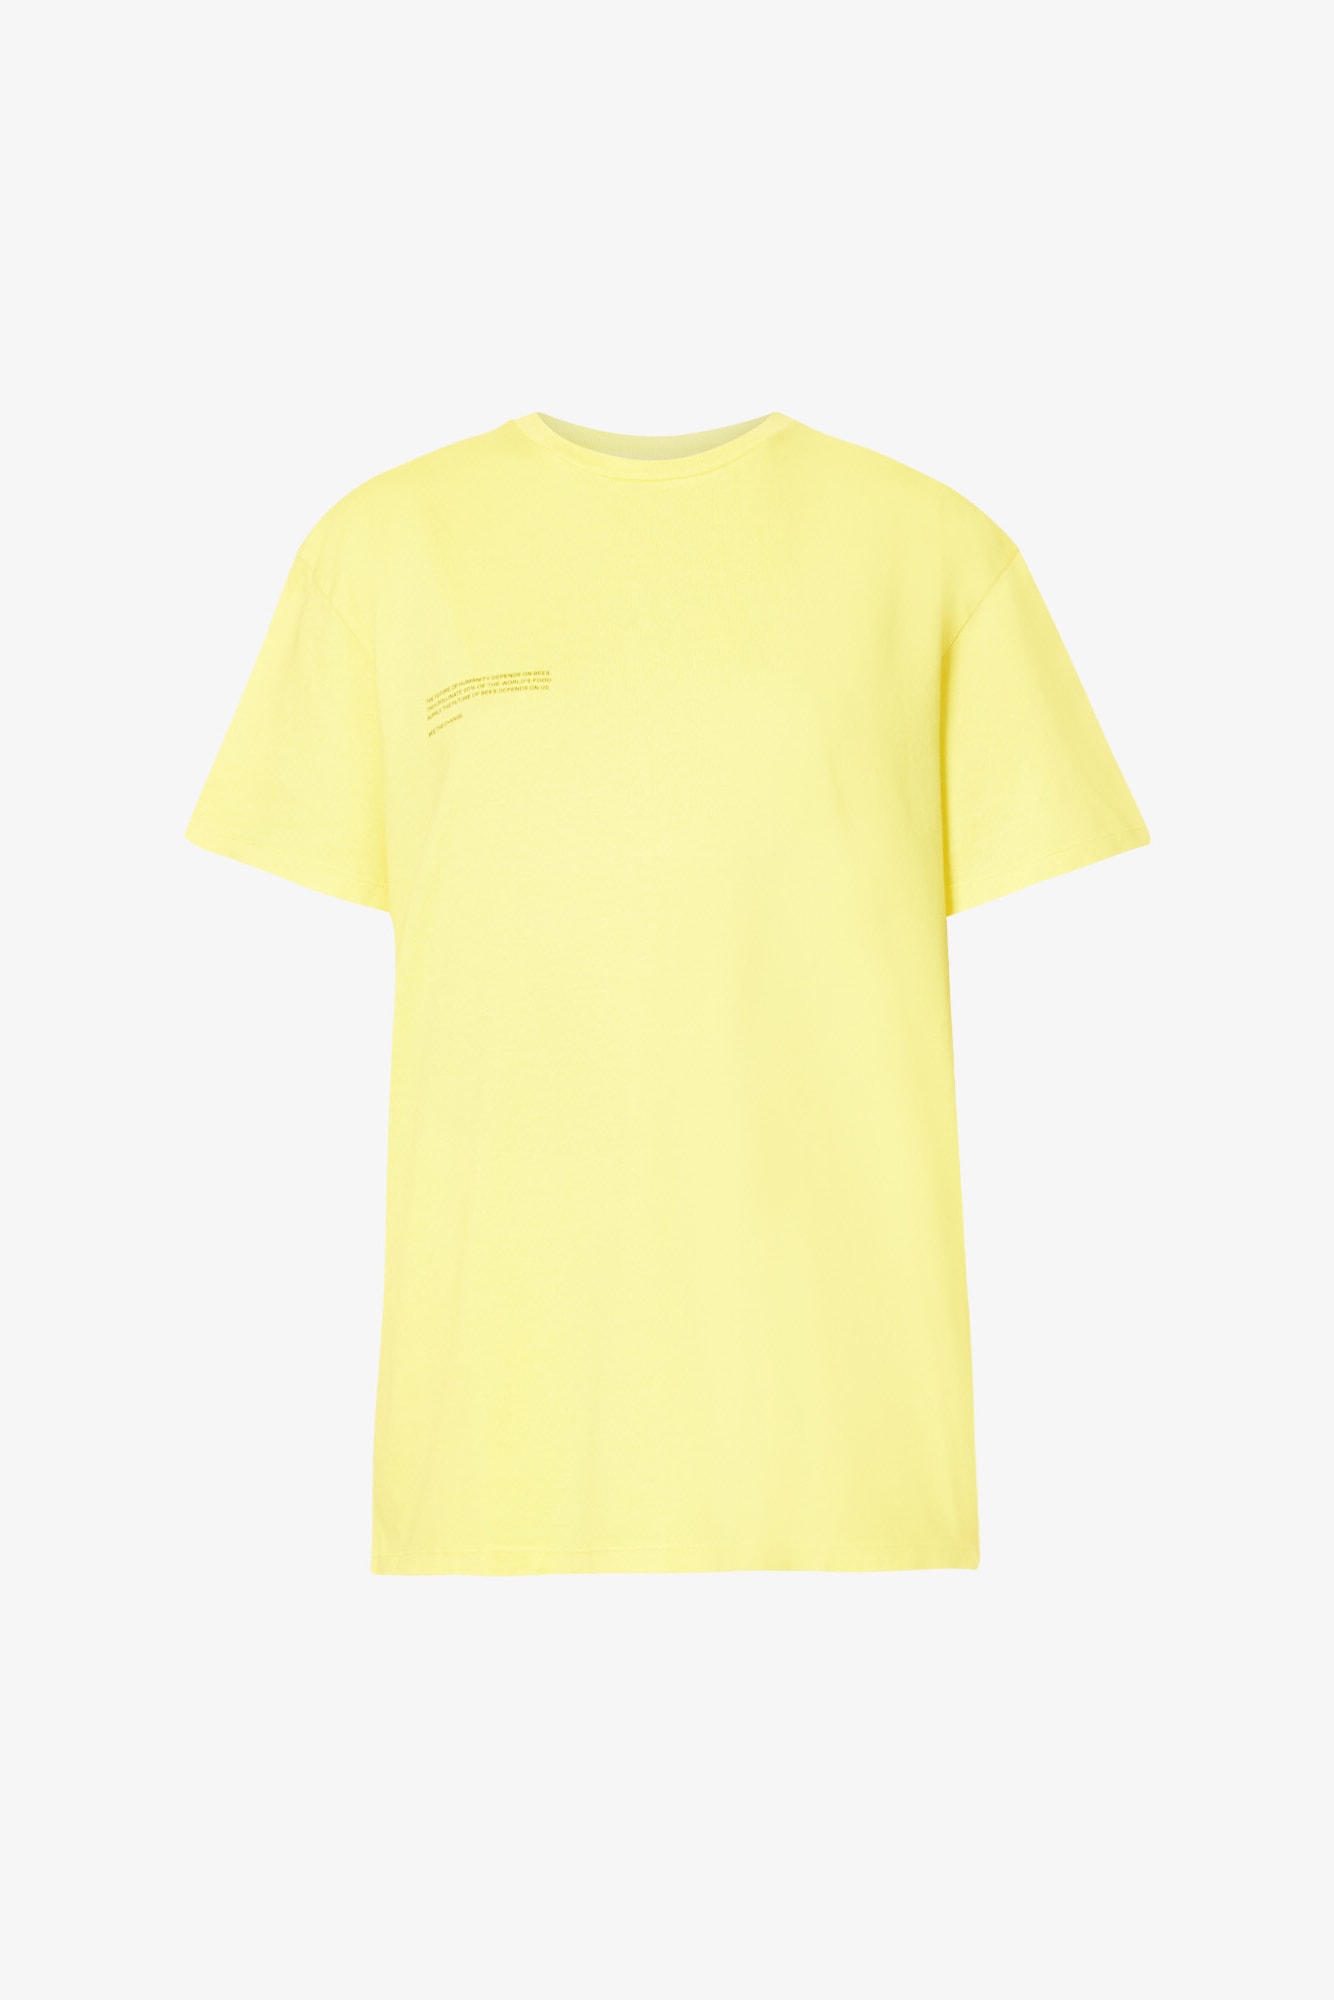 PANGAIA x Selfridges #BeeTheChange Collection Release Exclusive Capsule Sustainable Fashion Yellow Hoodie Sweatpants Shorts